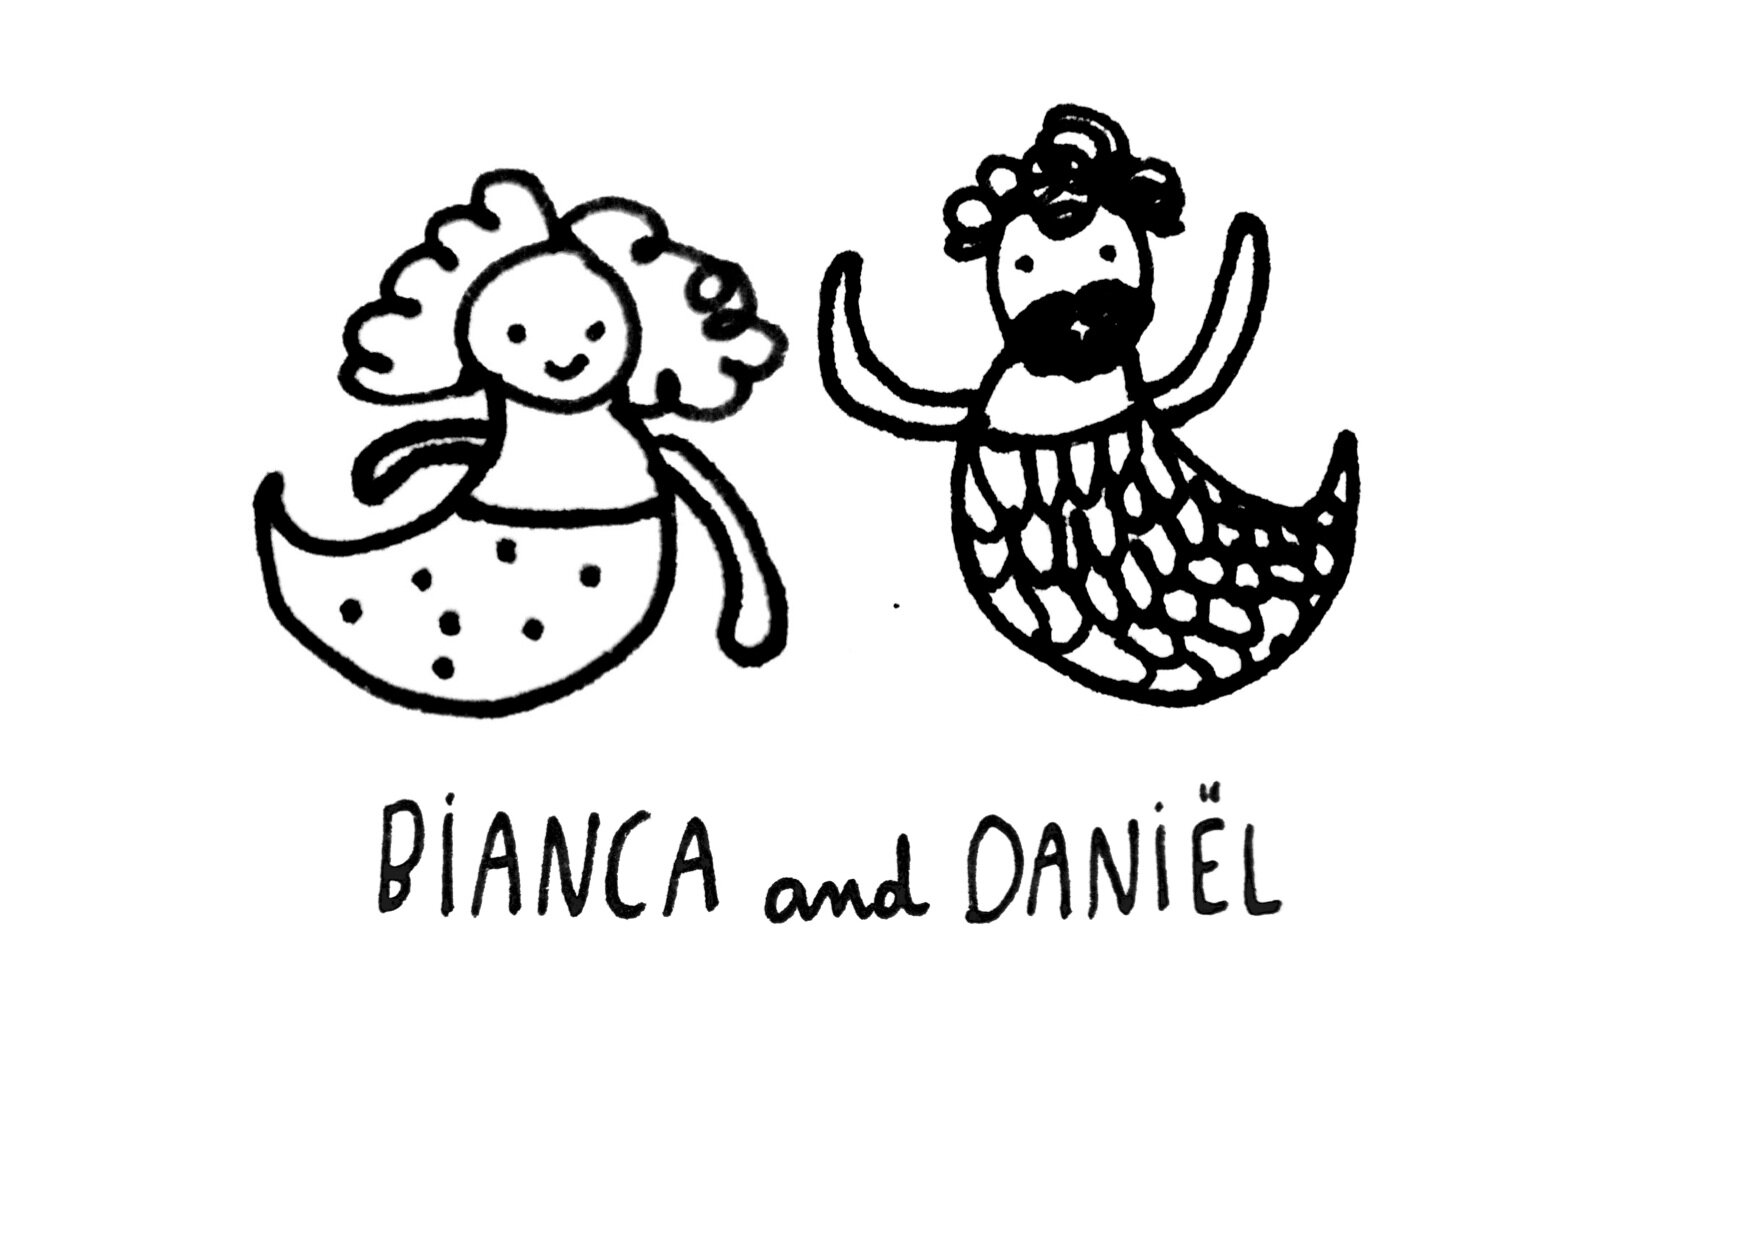 Bianca and Daniël